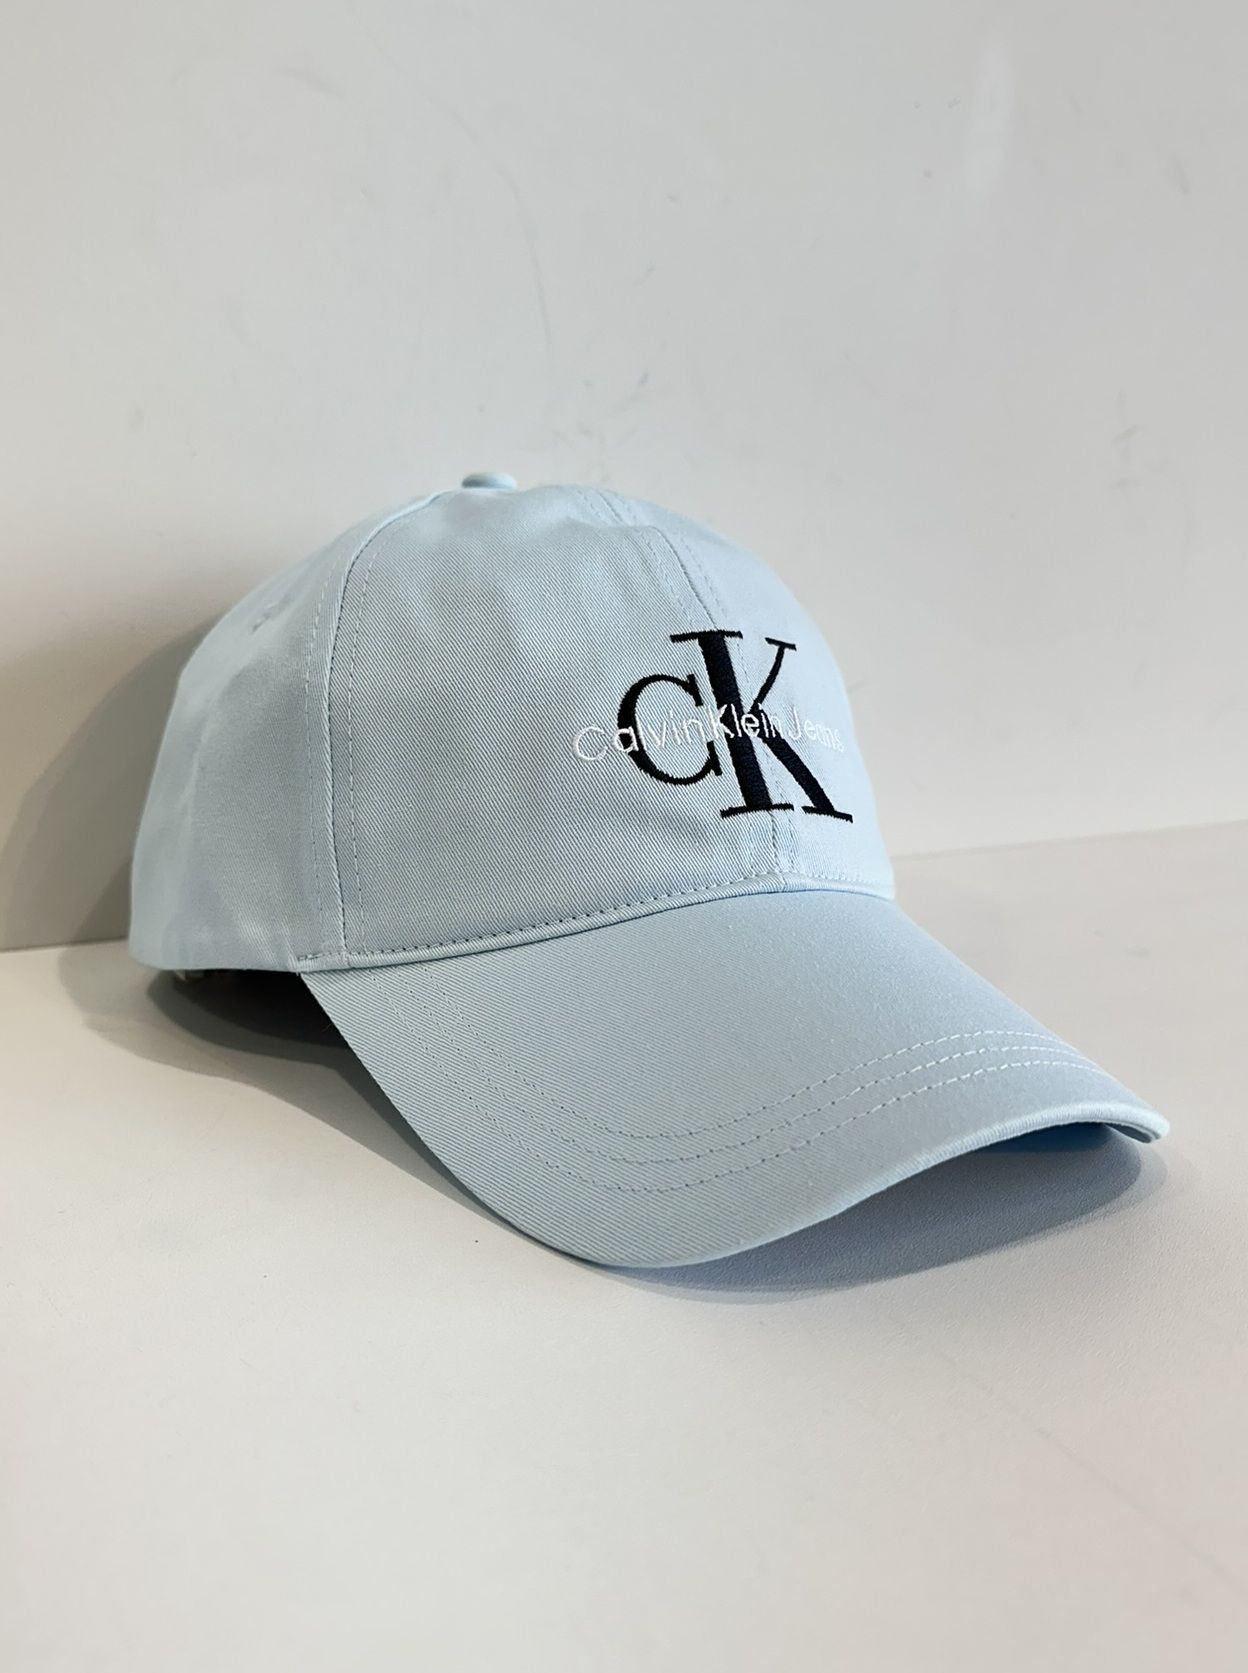 Calvin Klein - MONOGRAM CAP / K510061 / モノグラムキャップ